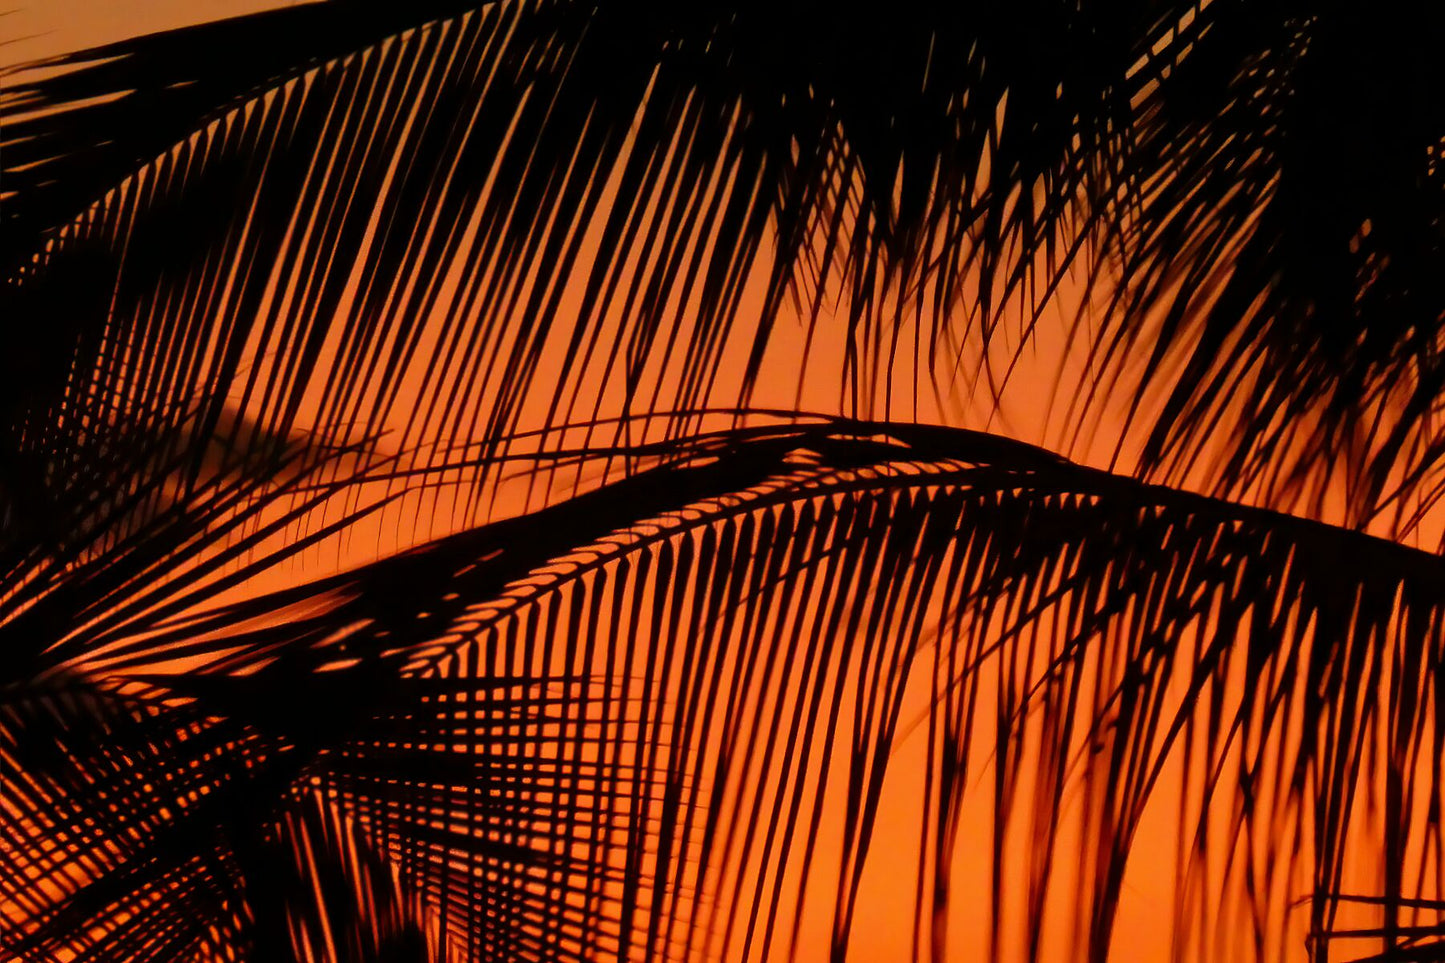 Palms close up over orange sky